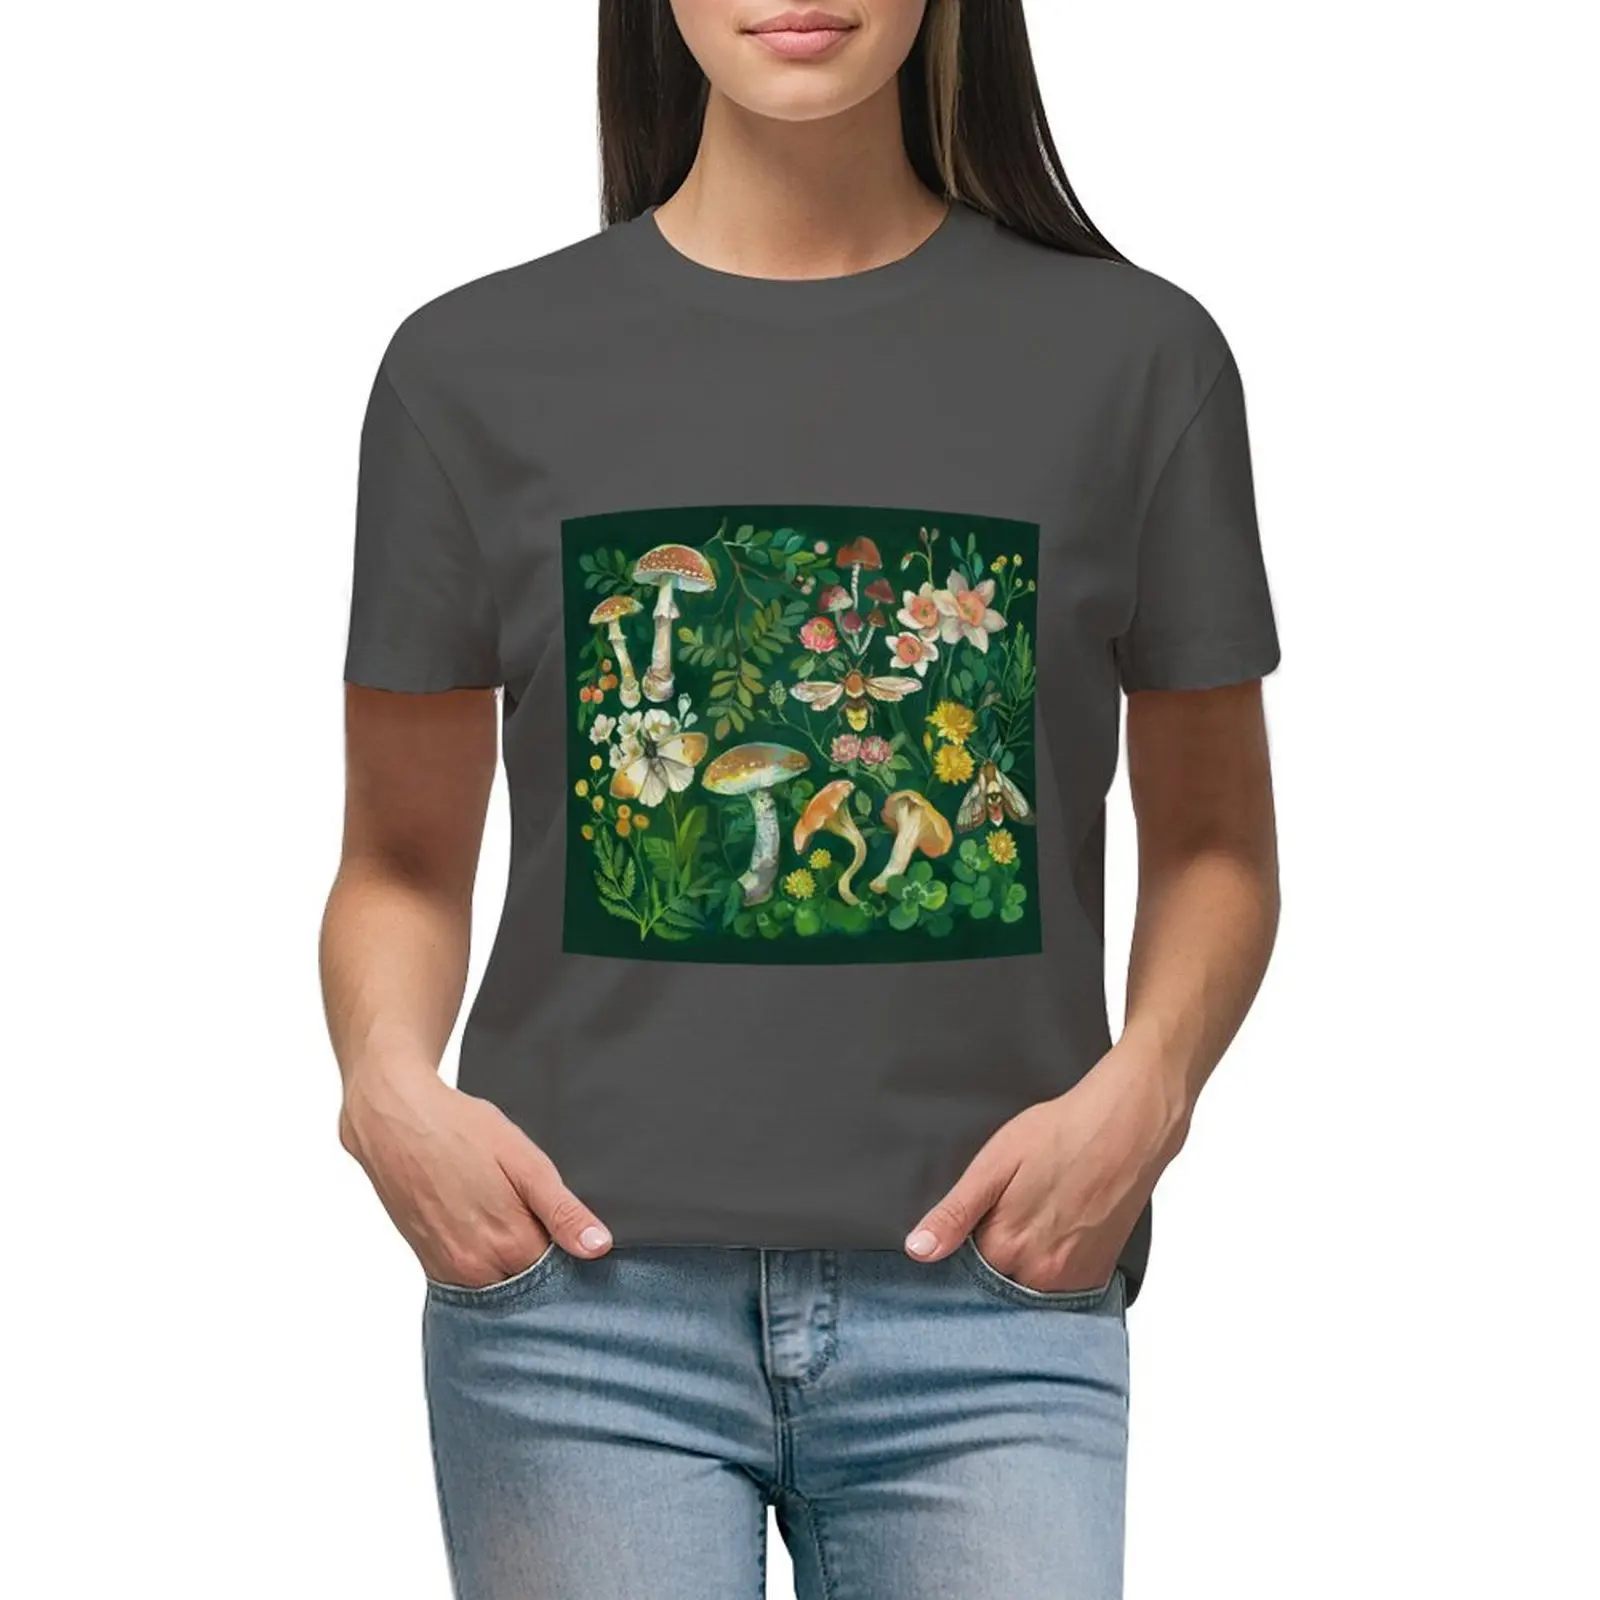 

Mushroom Dandelion Garden T-shirt animal print shirt for girls oversized kawaii clothes workout shirts for Women loose fit